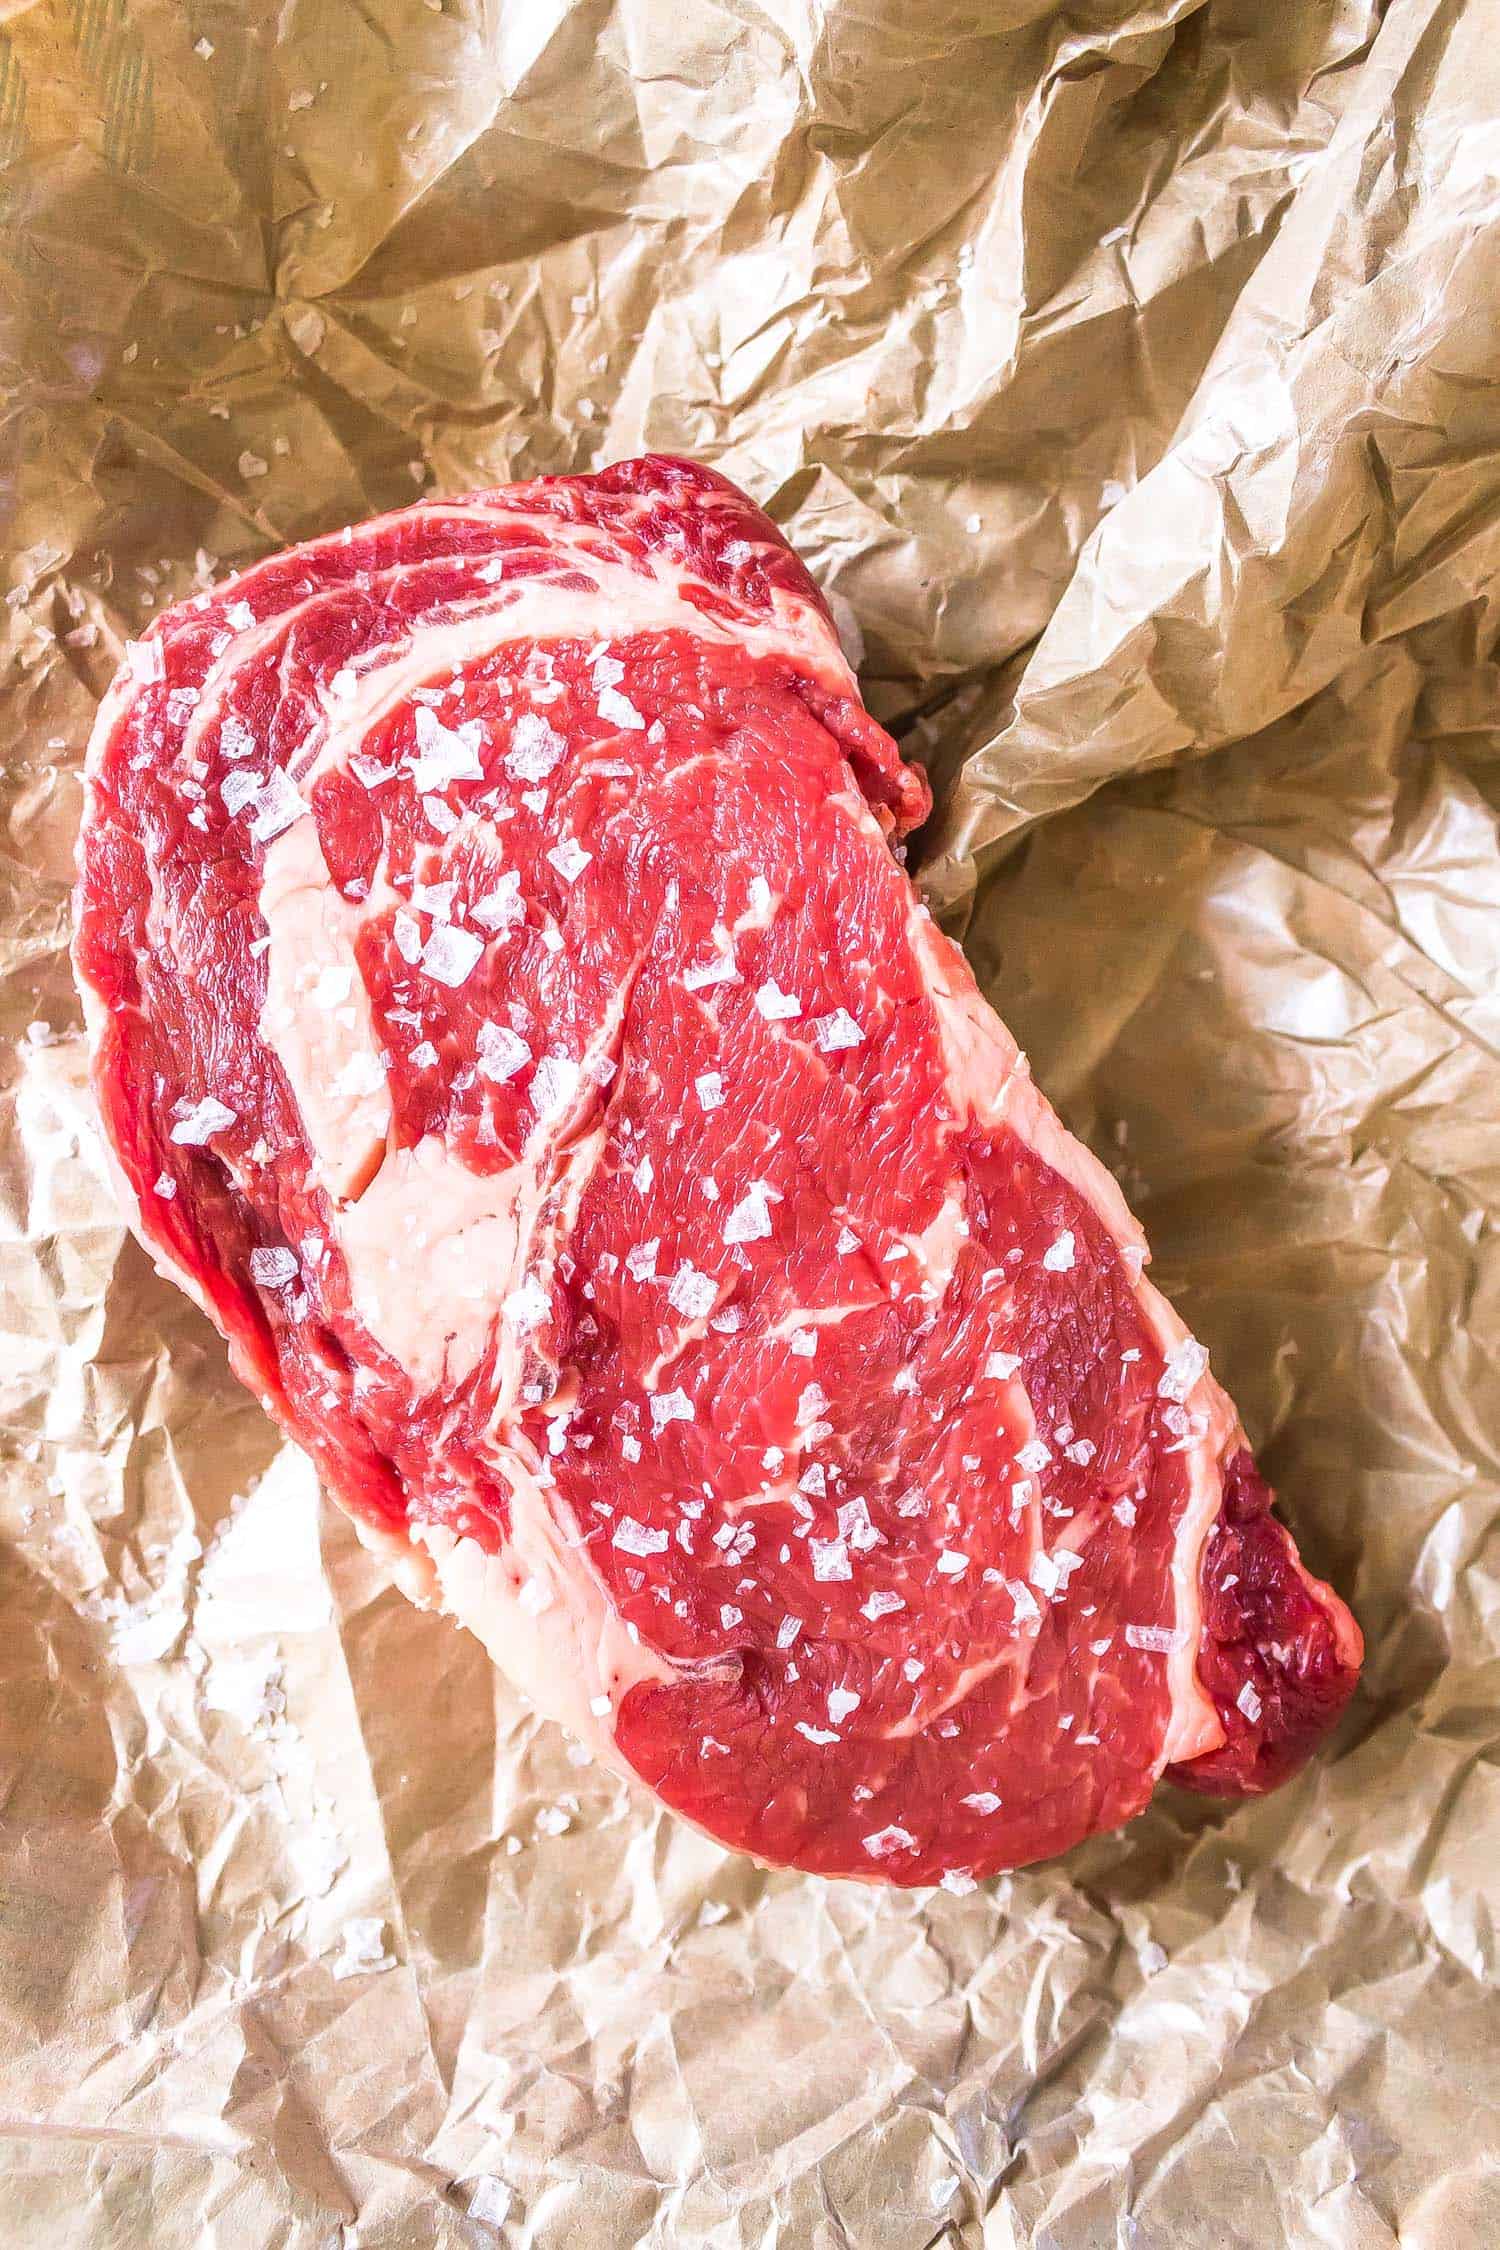 raw steak on a sheet of butcher paper